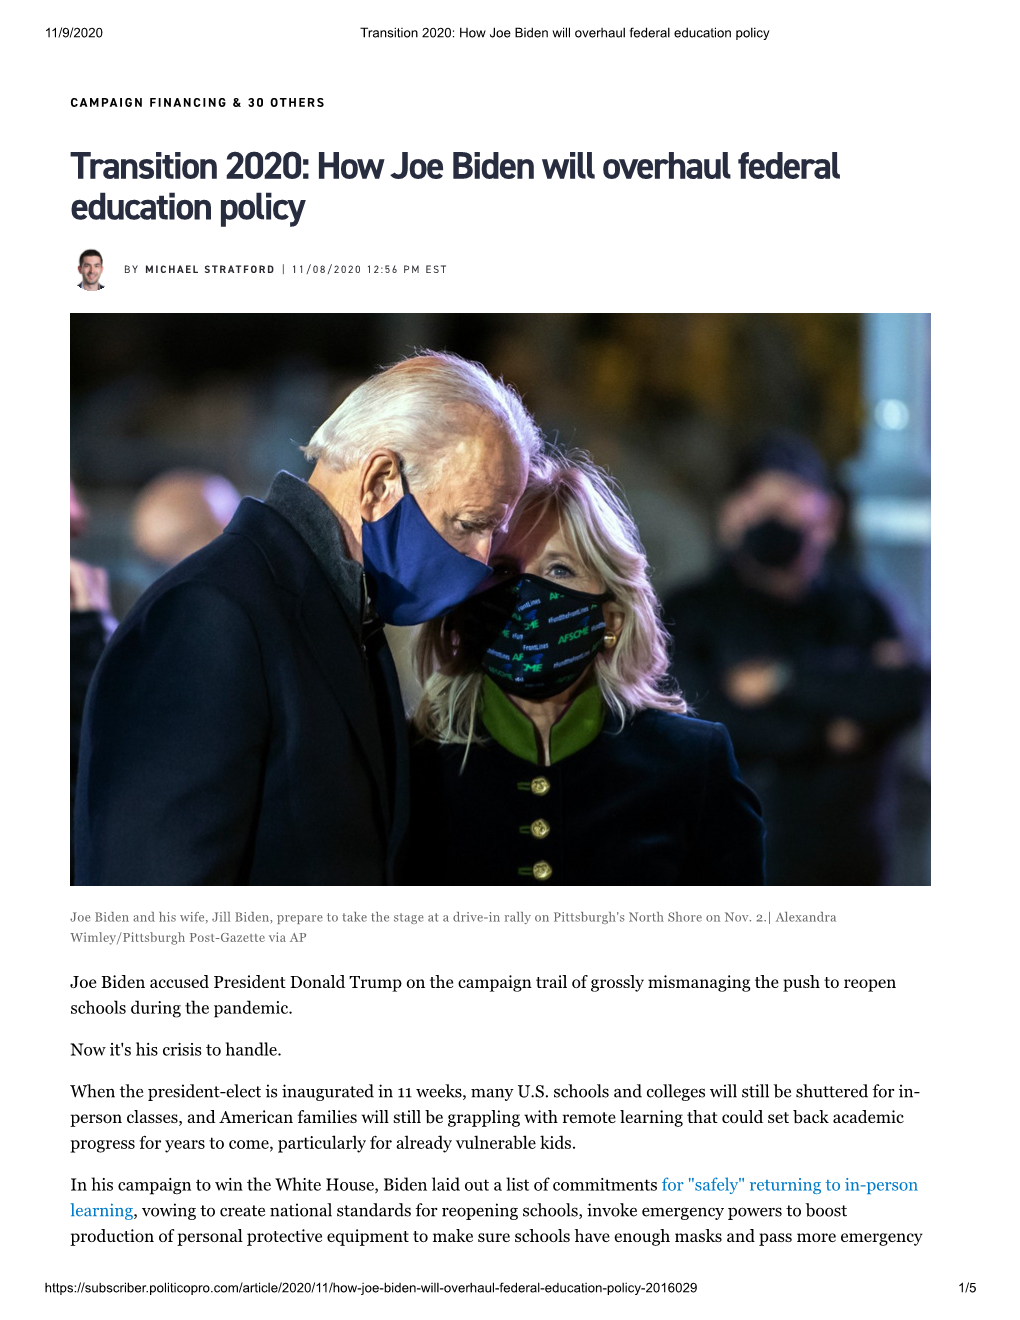 Transition 2020: How Joe Biden Will Overhaul Federal Education Policy S K I P to M a I N CO N T E N T